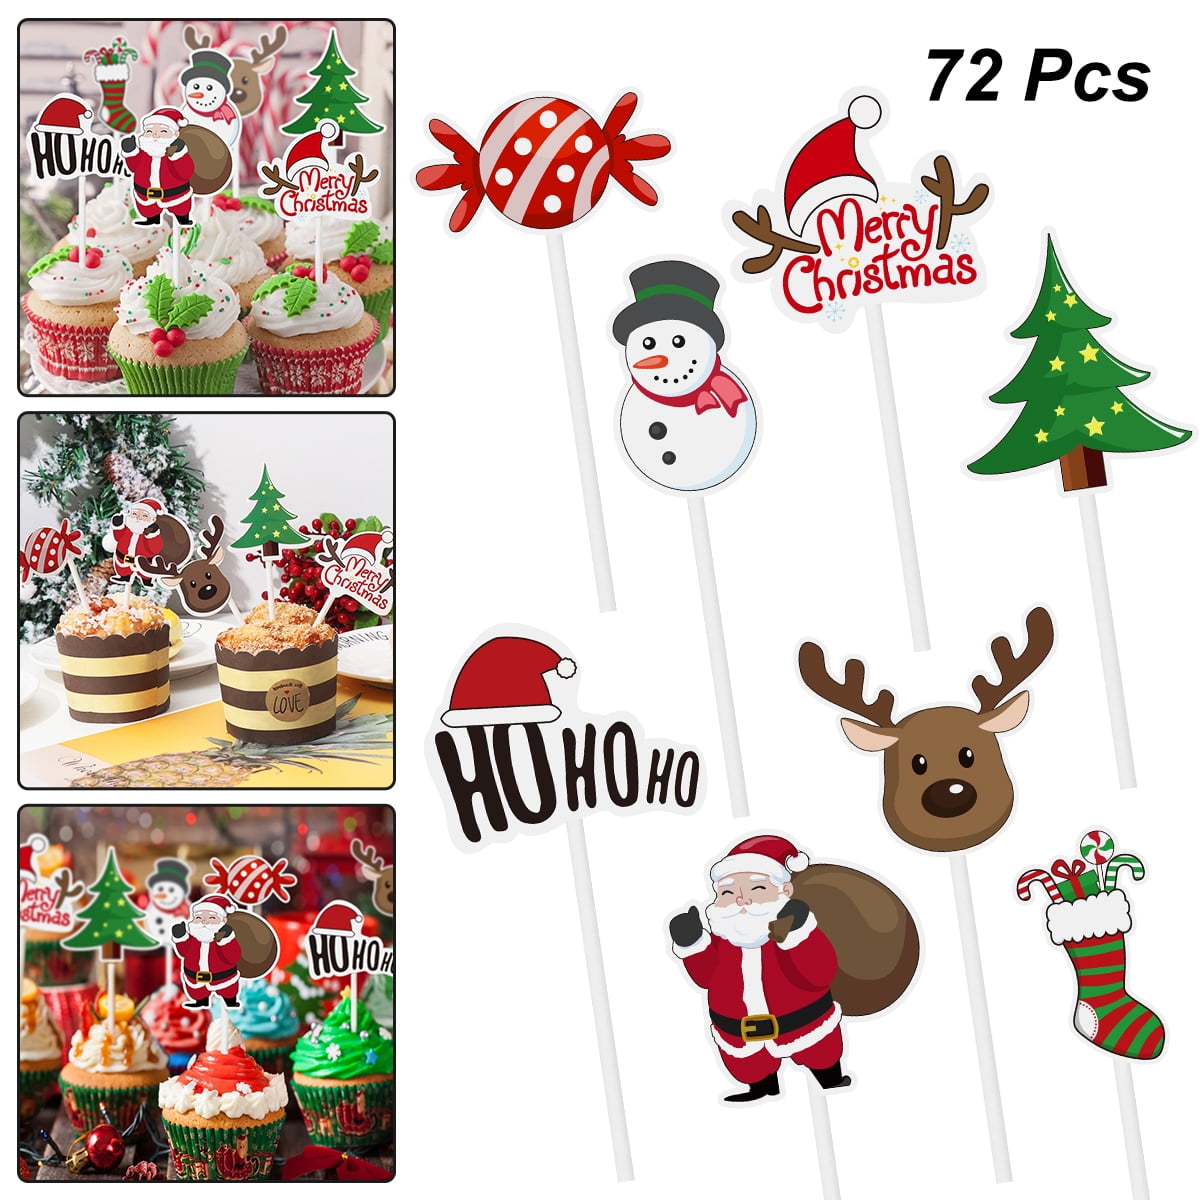 Christmas Cupcake Santa Claus Tree Snowman Sock Candy Theme Party Cake Toppers Picks Decoration Supplies Walmart.com